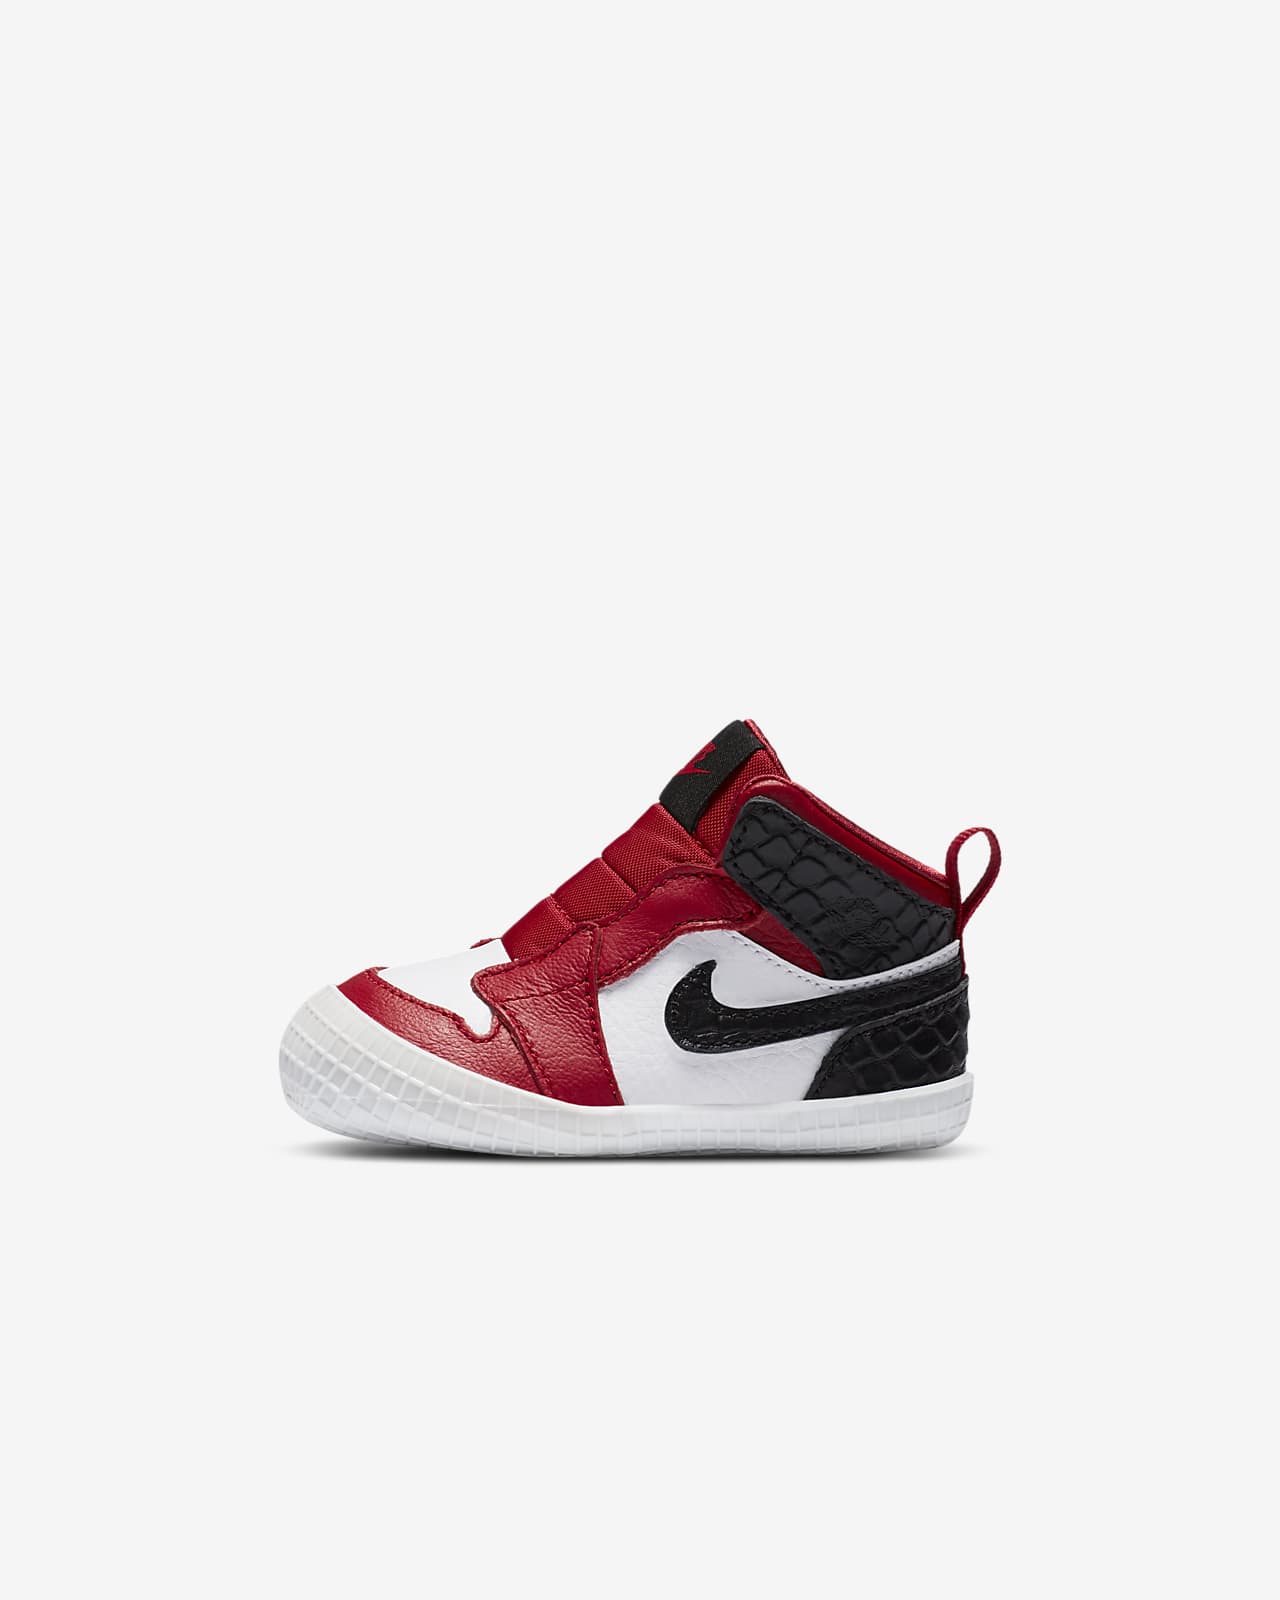 Jordan 1 Baby Cot Bootie. Nike DK